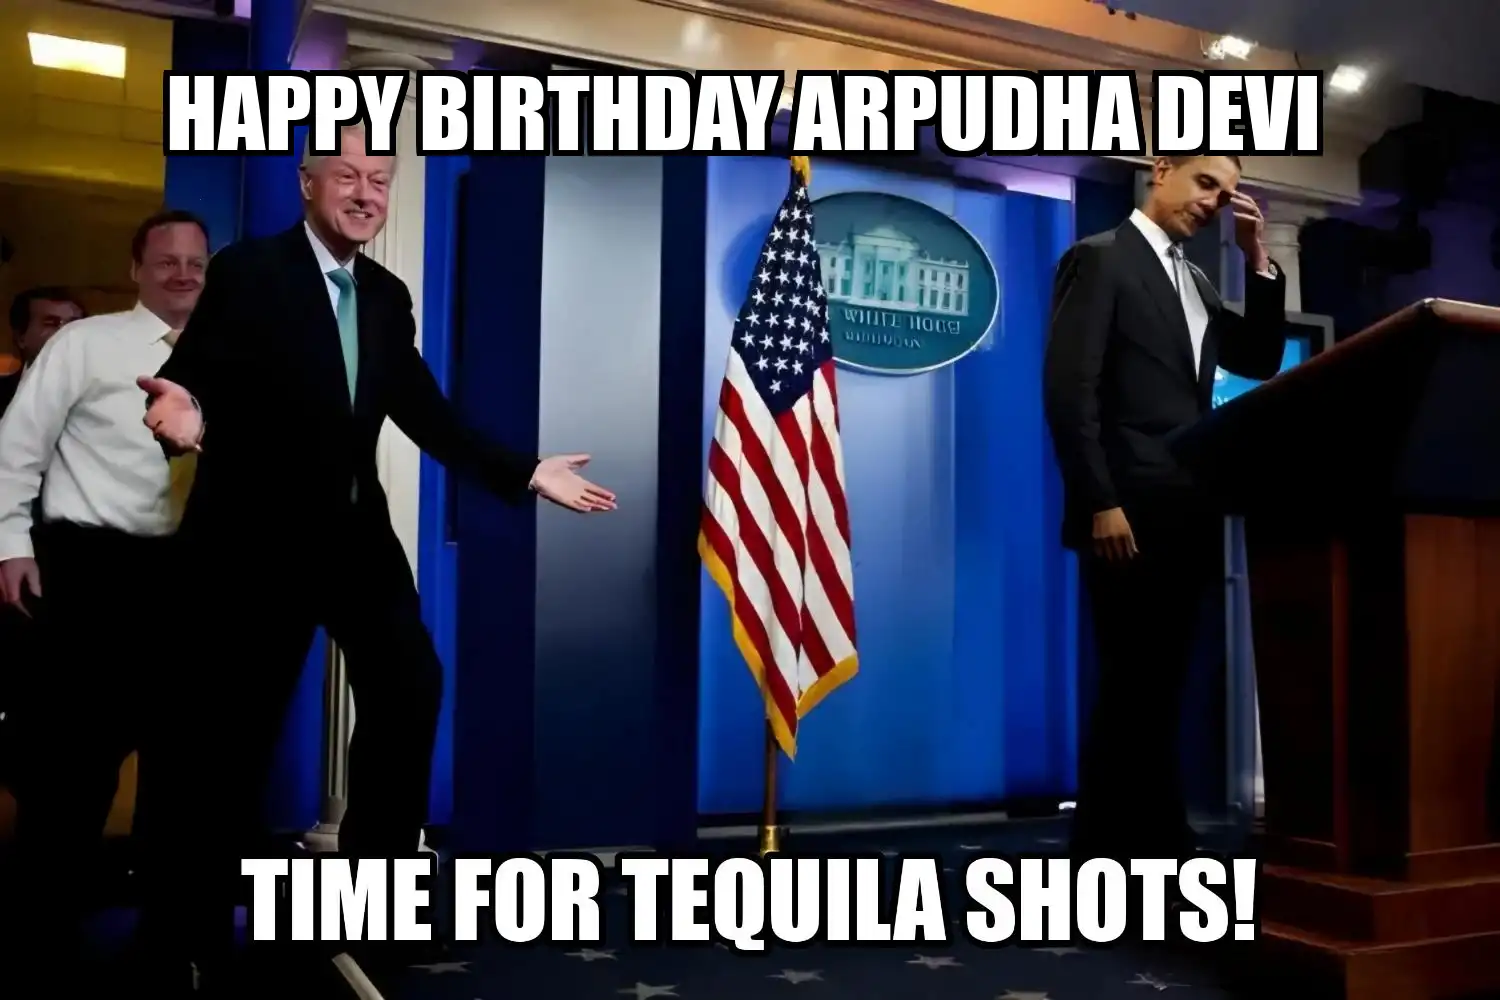 Happy Birthday Arpudha devi Time For Tequila Shots Memes